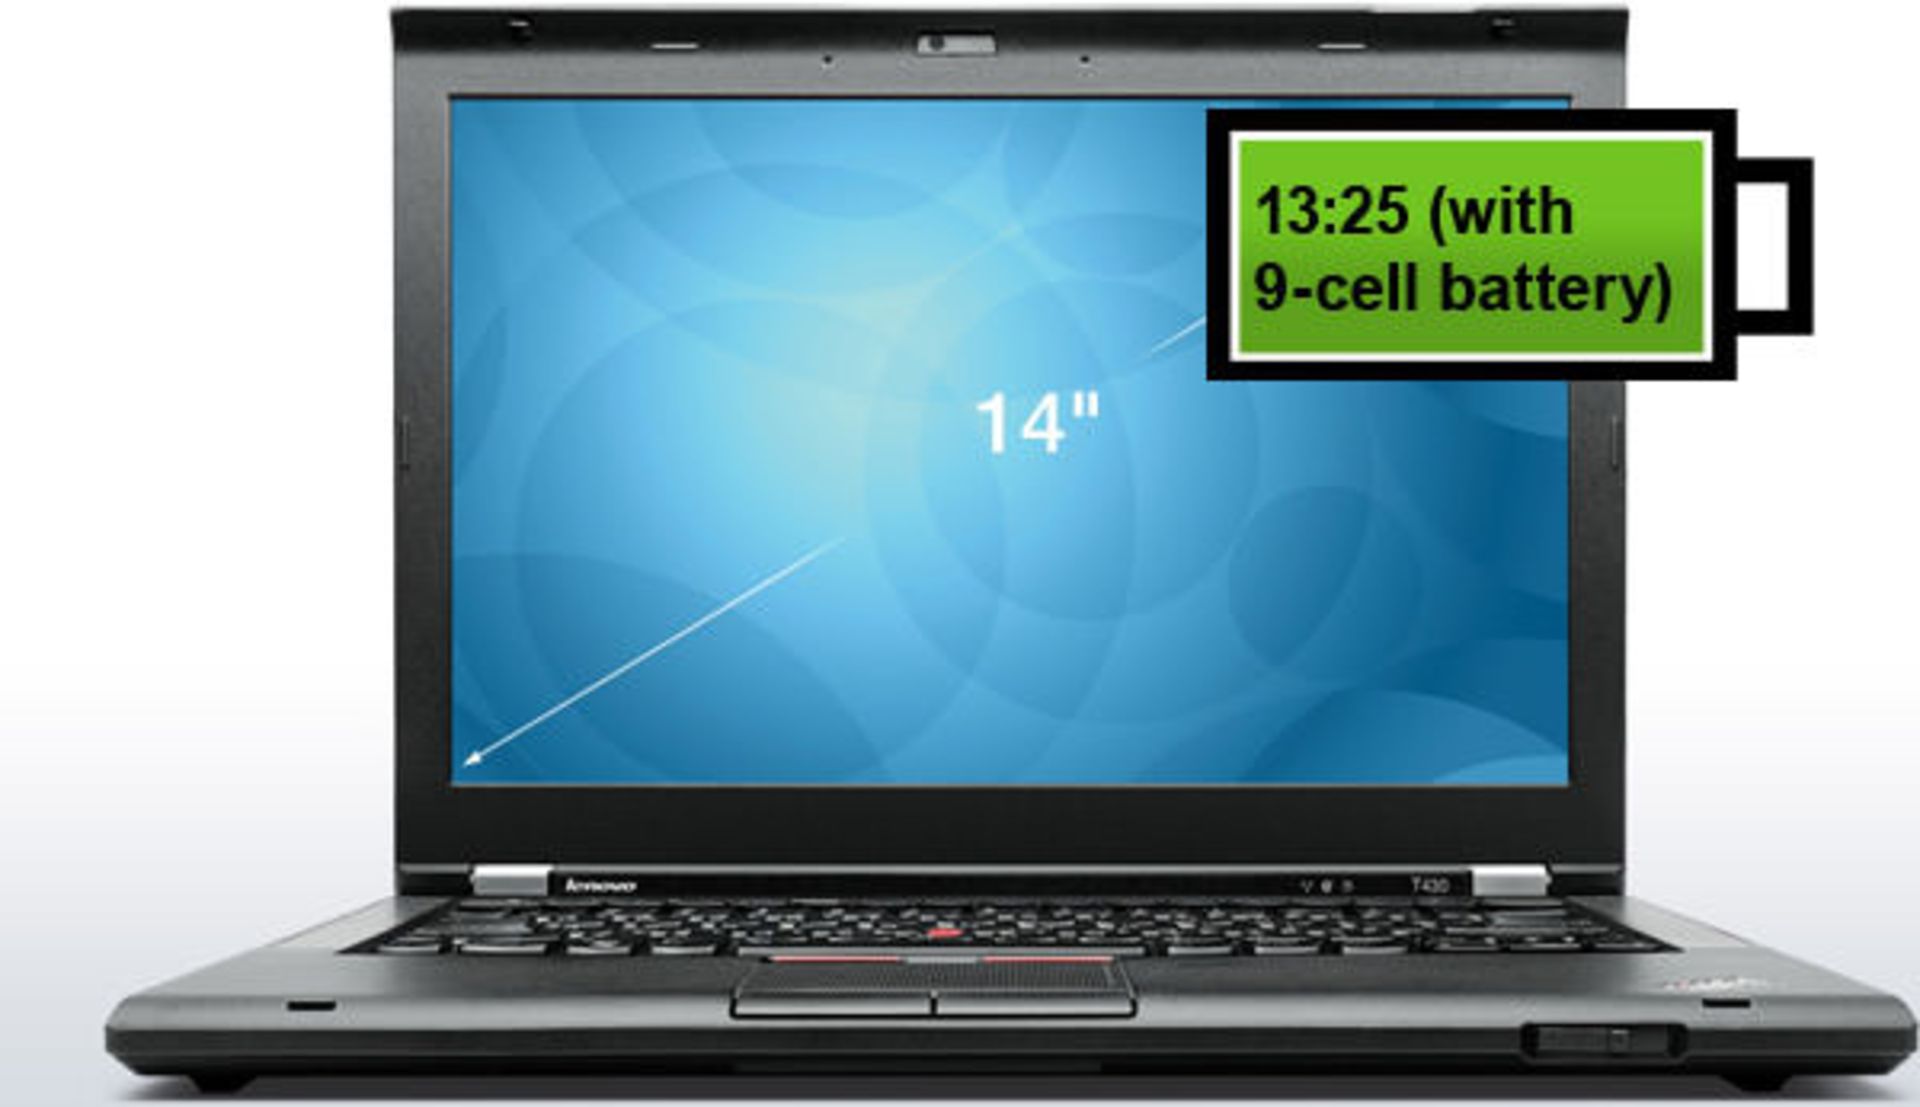 ThinkPad-T430-Laptop-PC-Front-View-2L-940x475